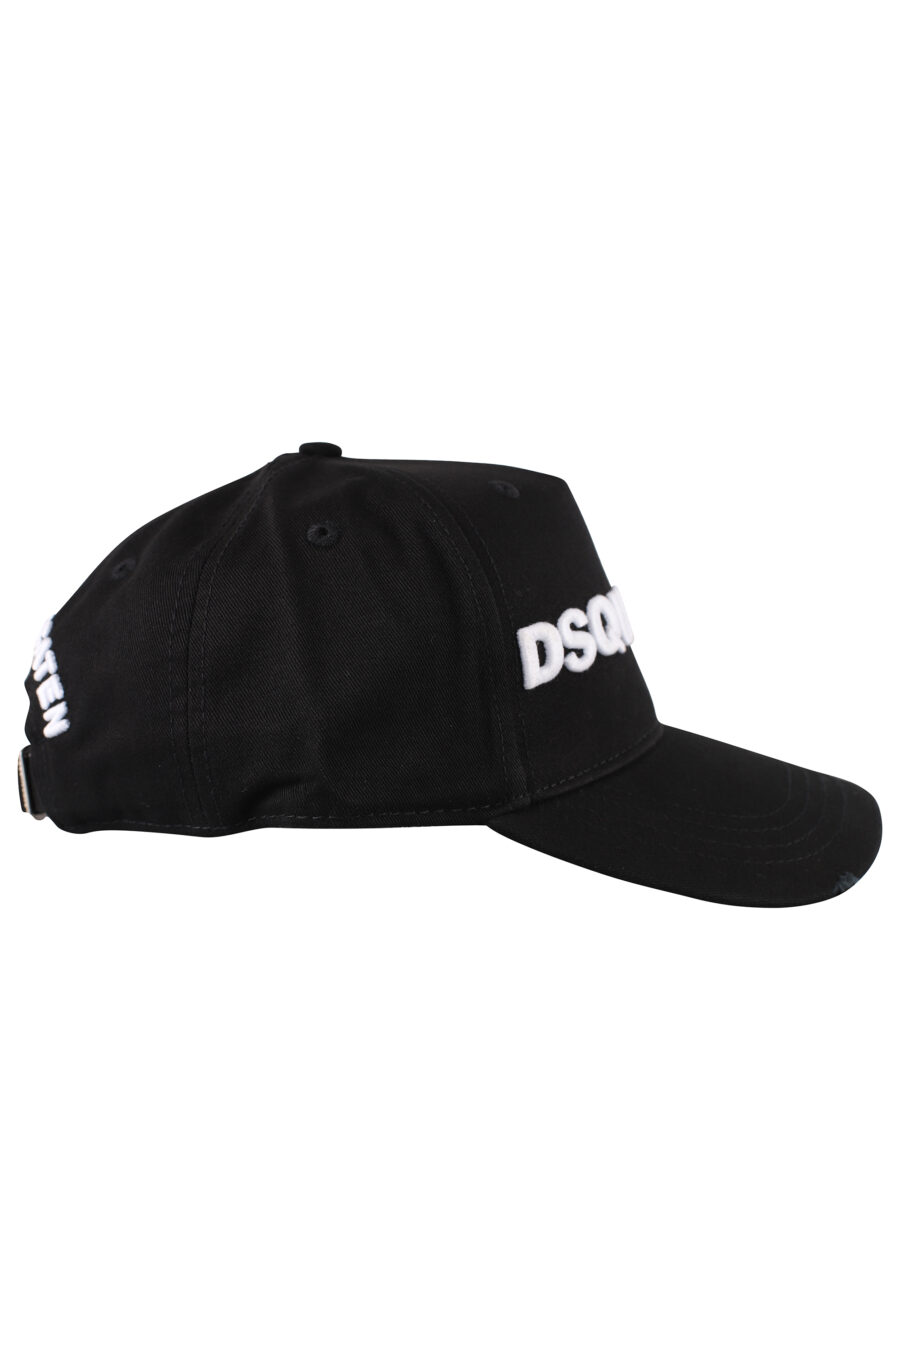 Schwarze Kappe mit weißem gesticktem Logo - IMG 1239